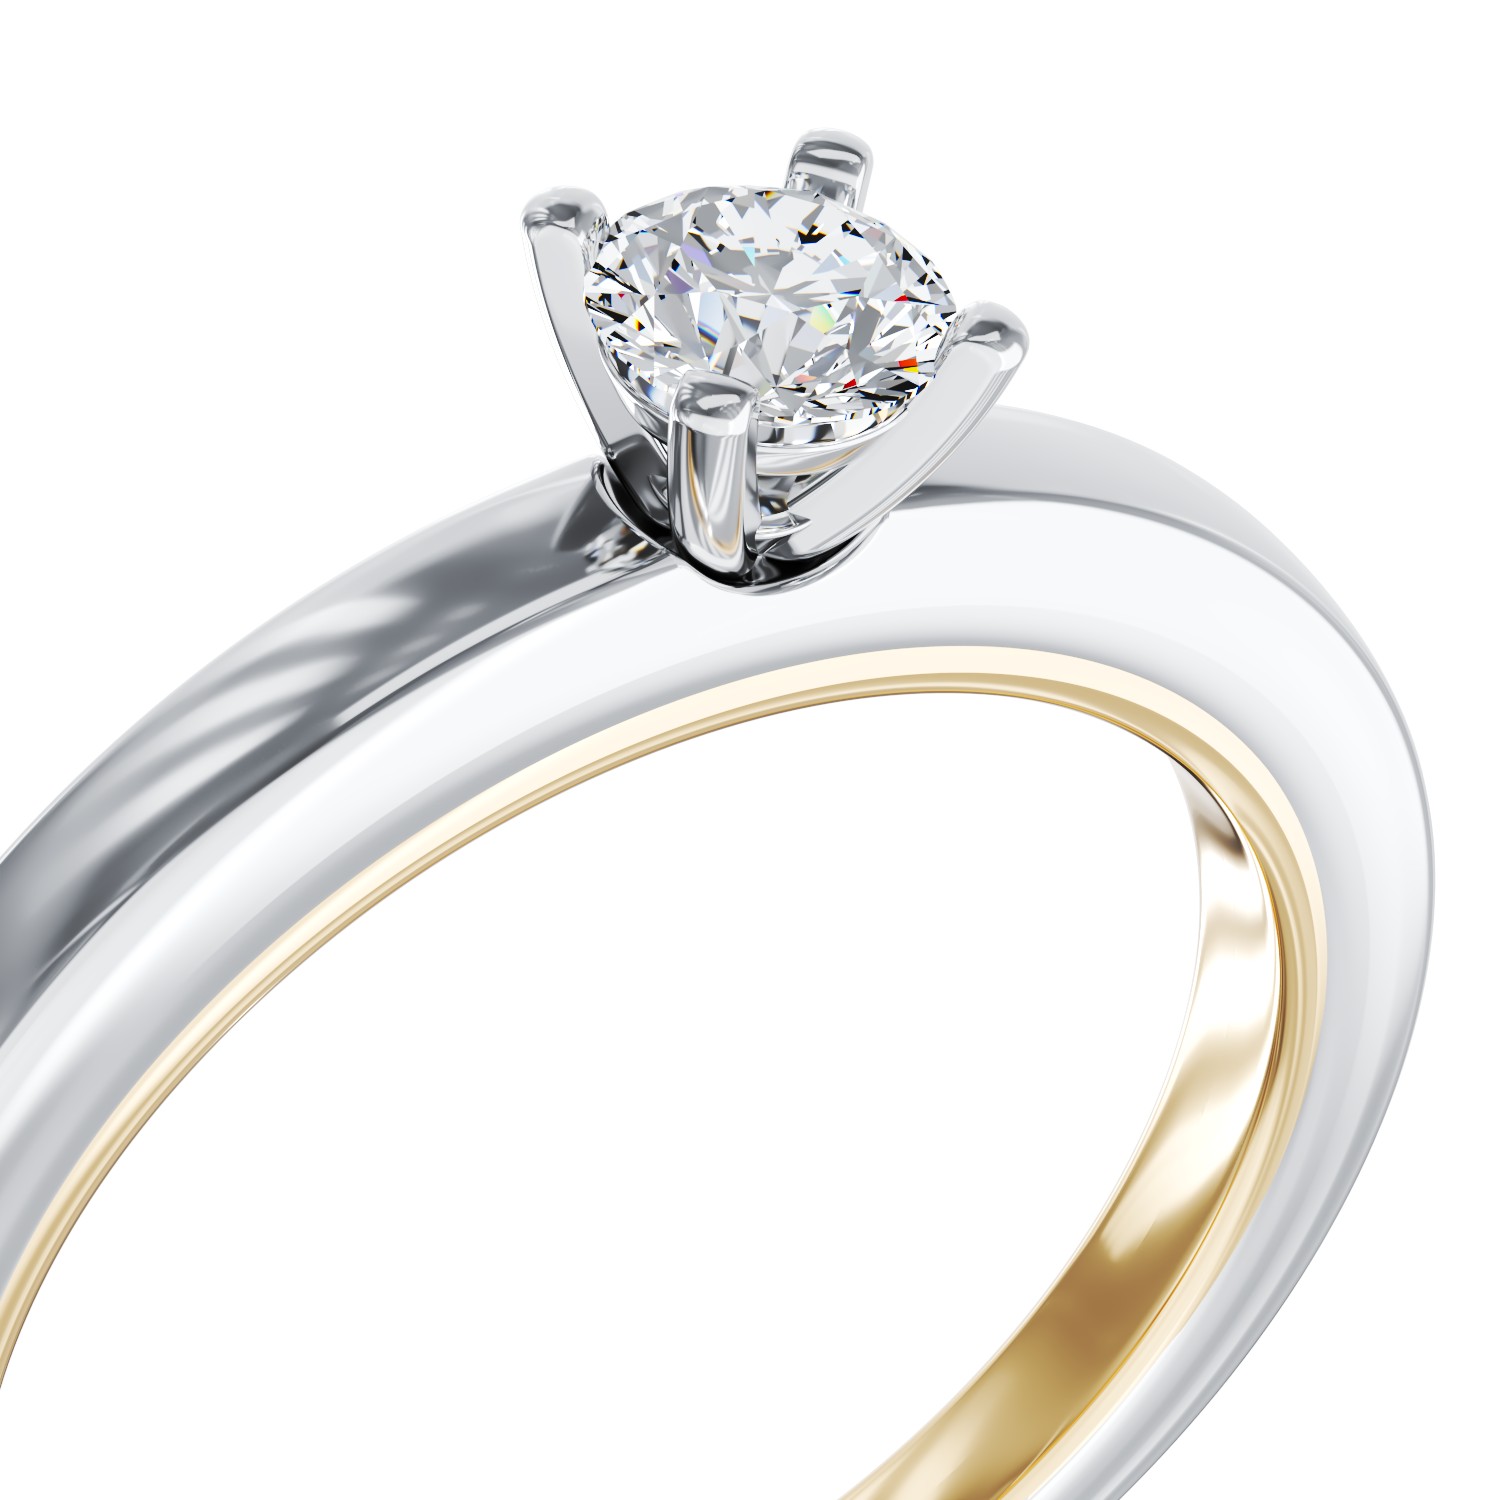 Inel de logodna din aur alb-galben de 18K cu un diamant solitaire de 0.15ct